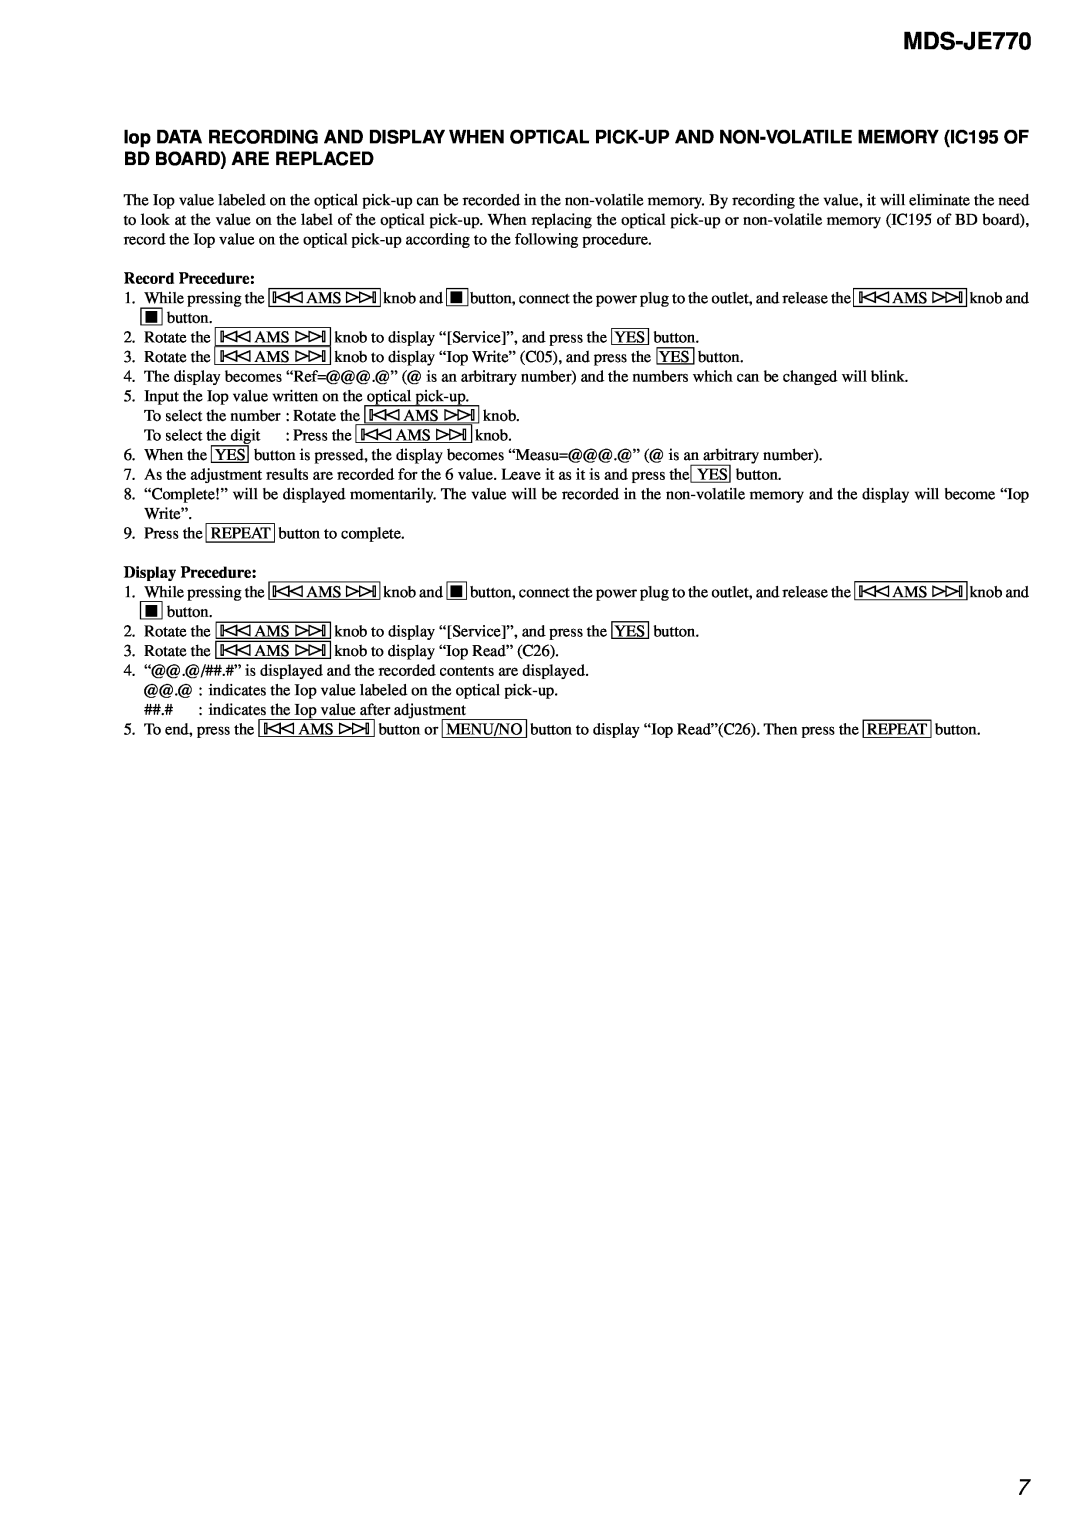 Sony MDS-JE770 specifications Record Precedure, Display Precedure 